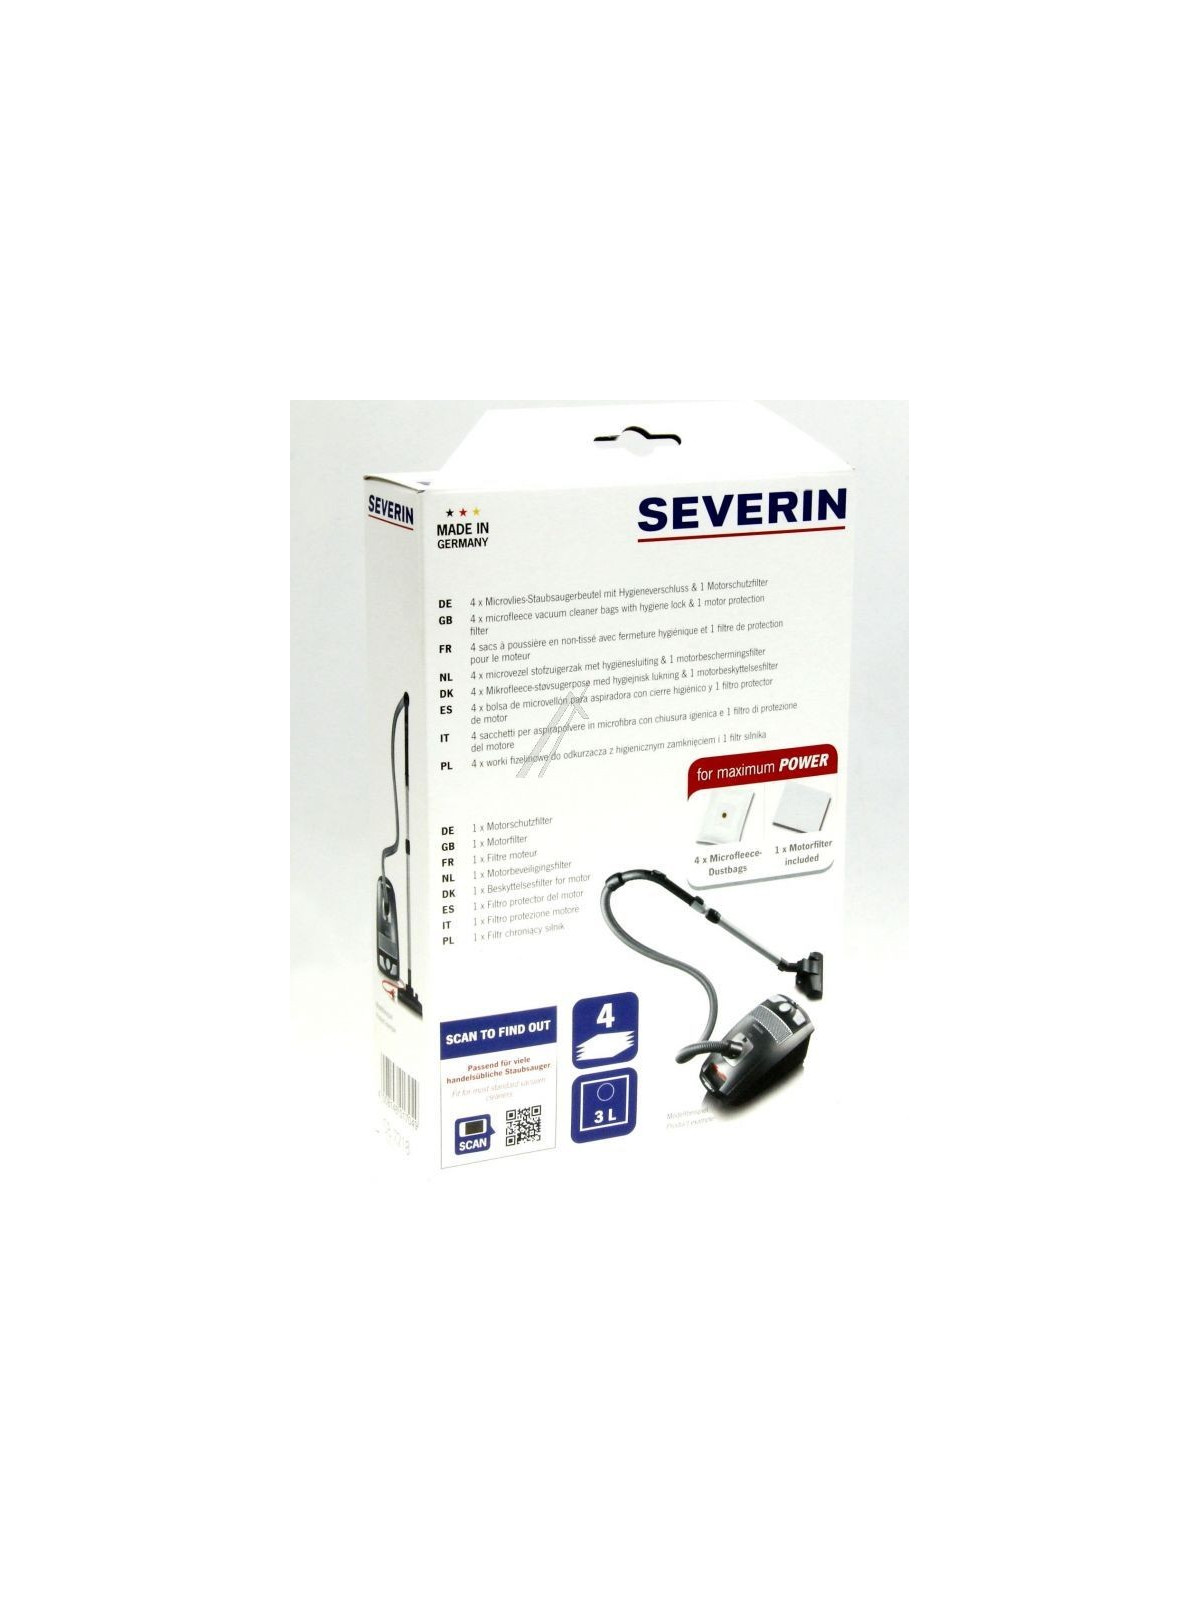 Sacs microfibres Severin S'Power BC7045 / BC7046 - Aspirateur